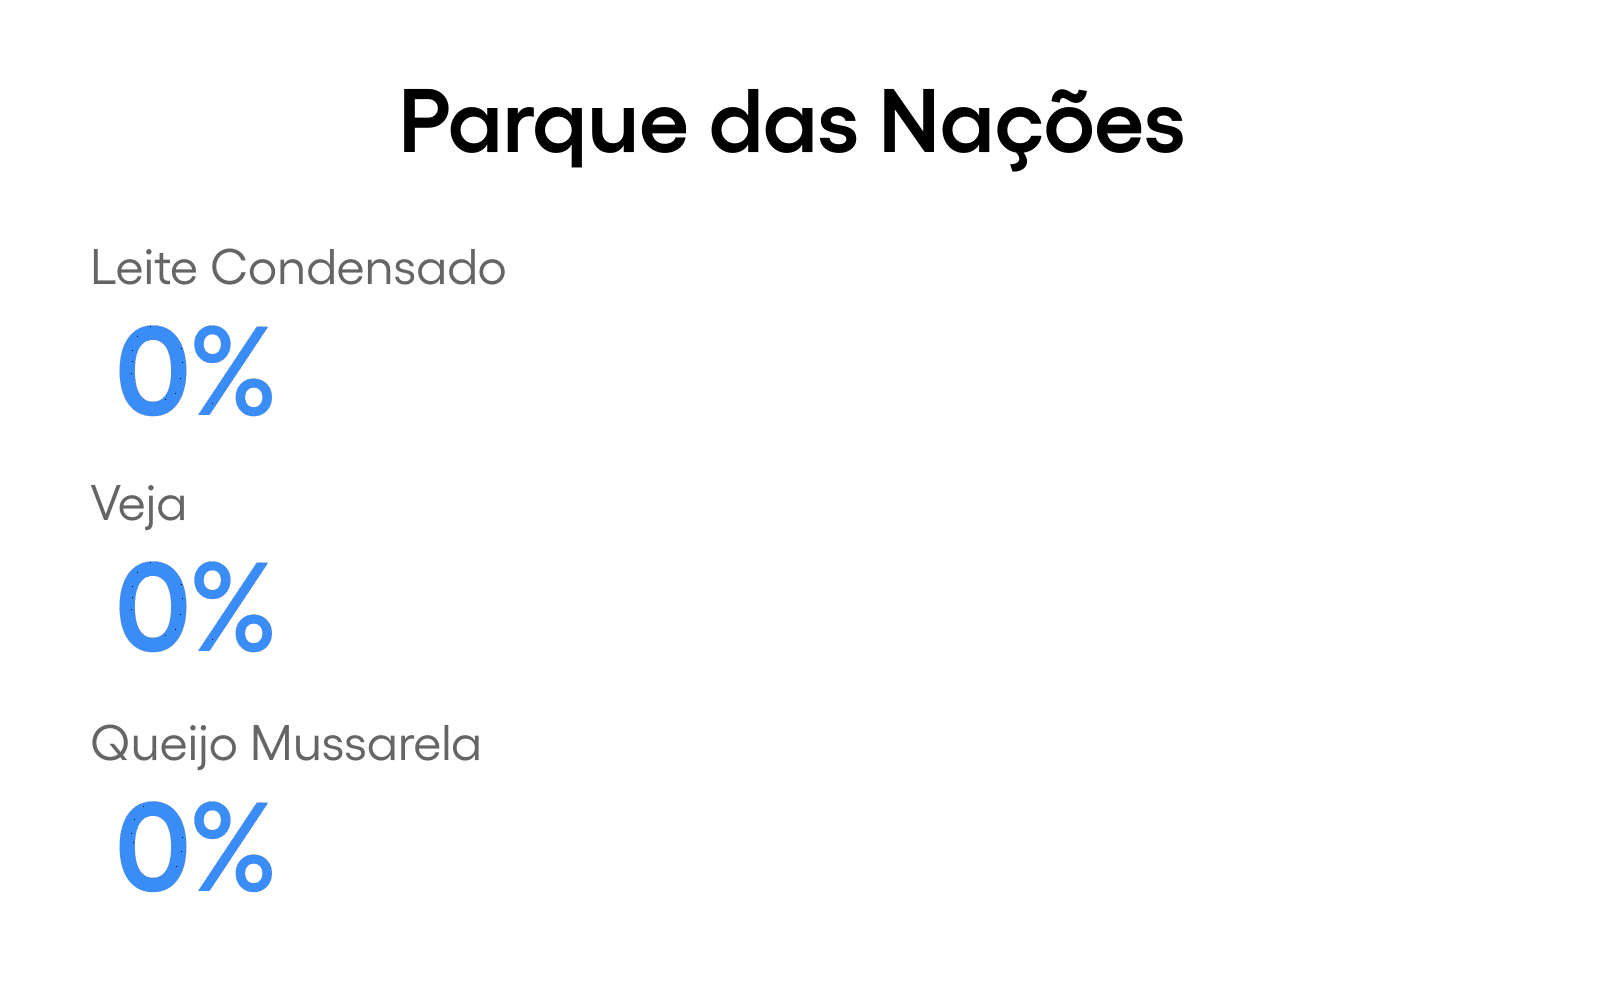 Parque das Nações